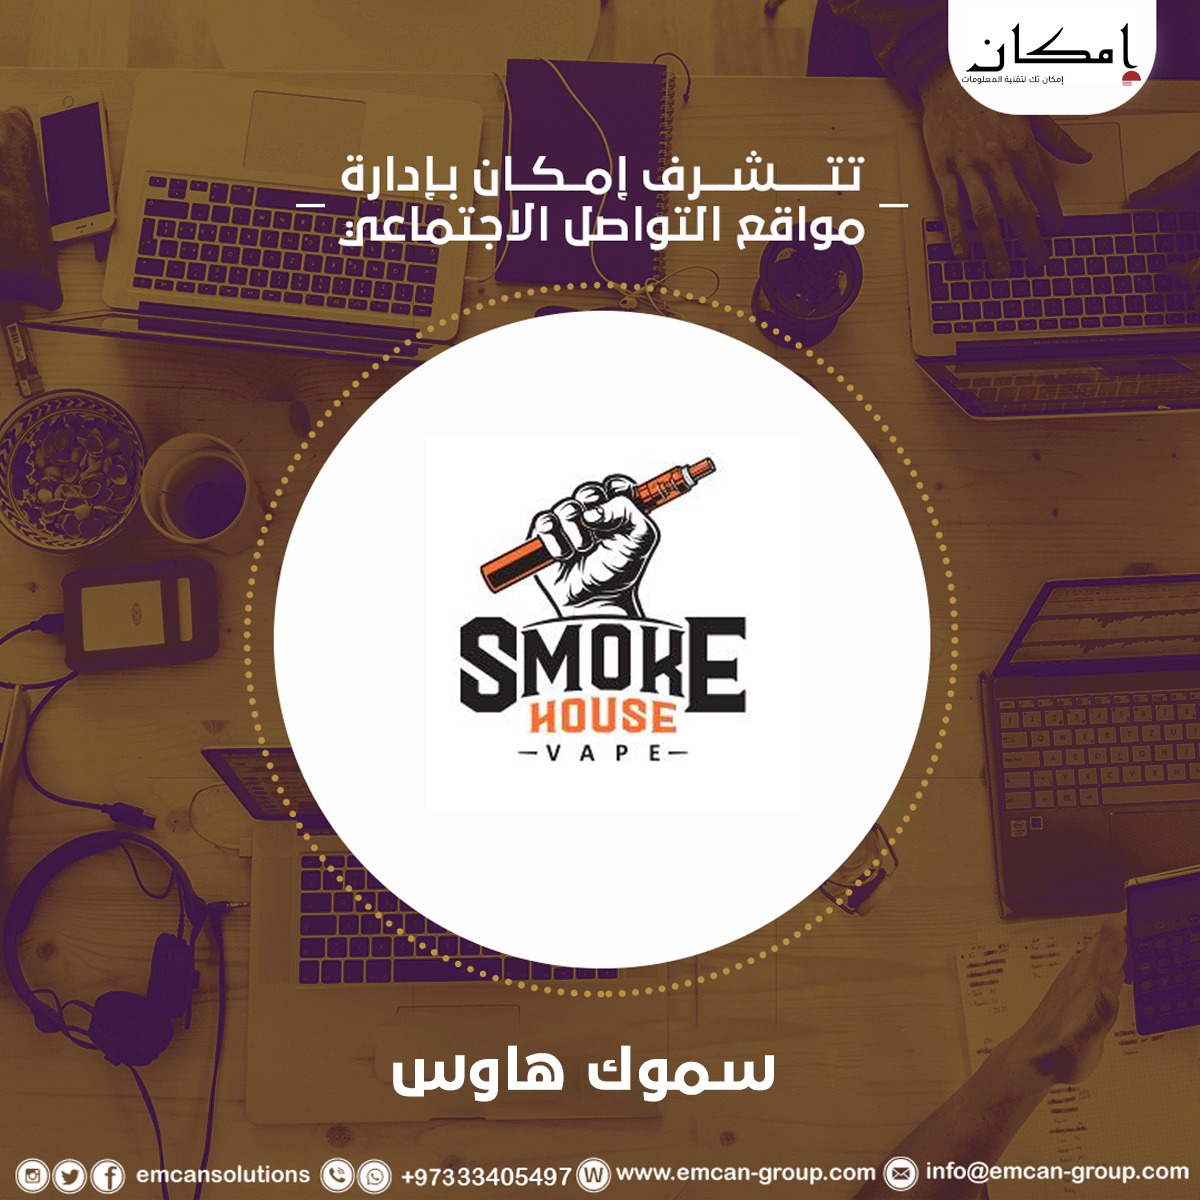 Social media management for Smoke House